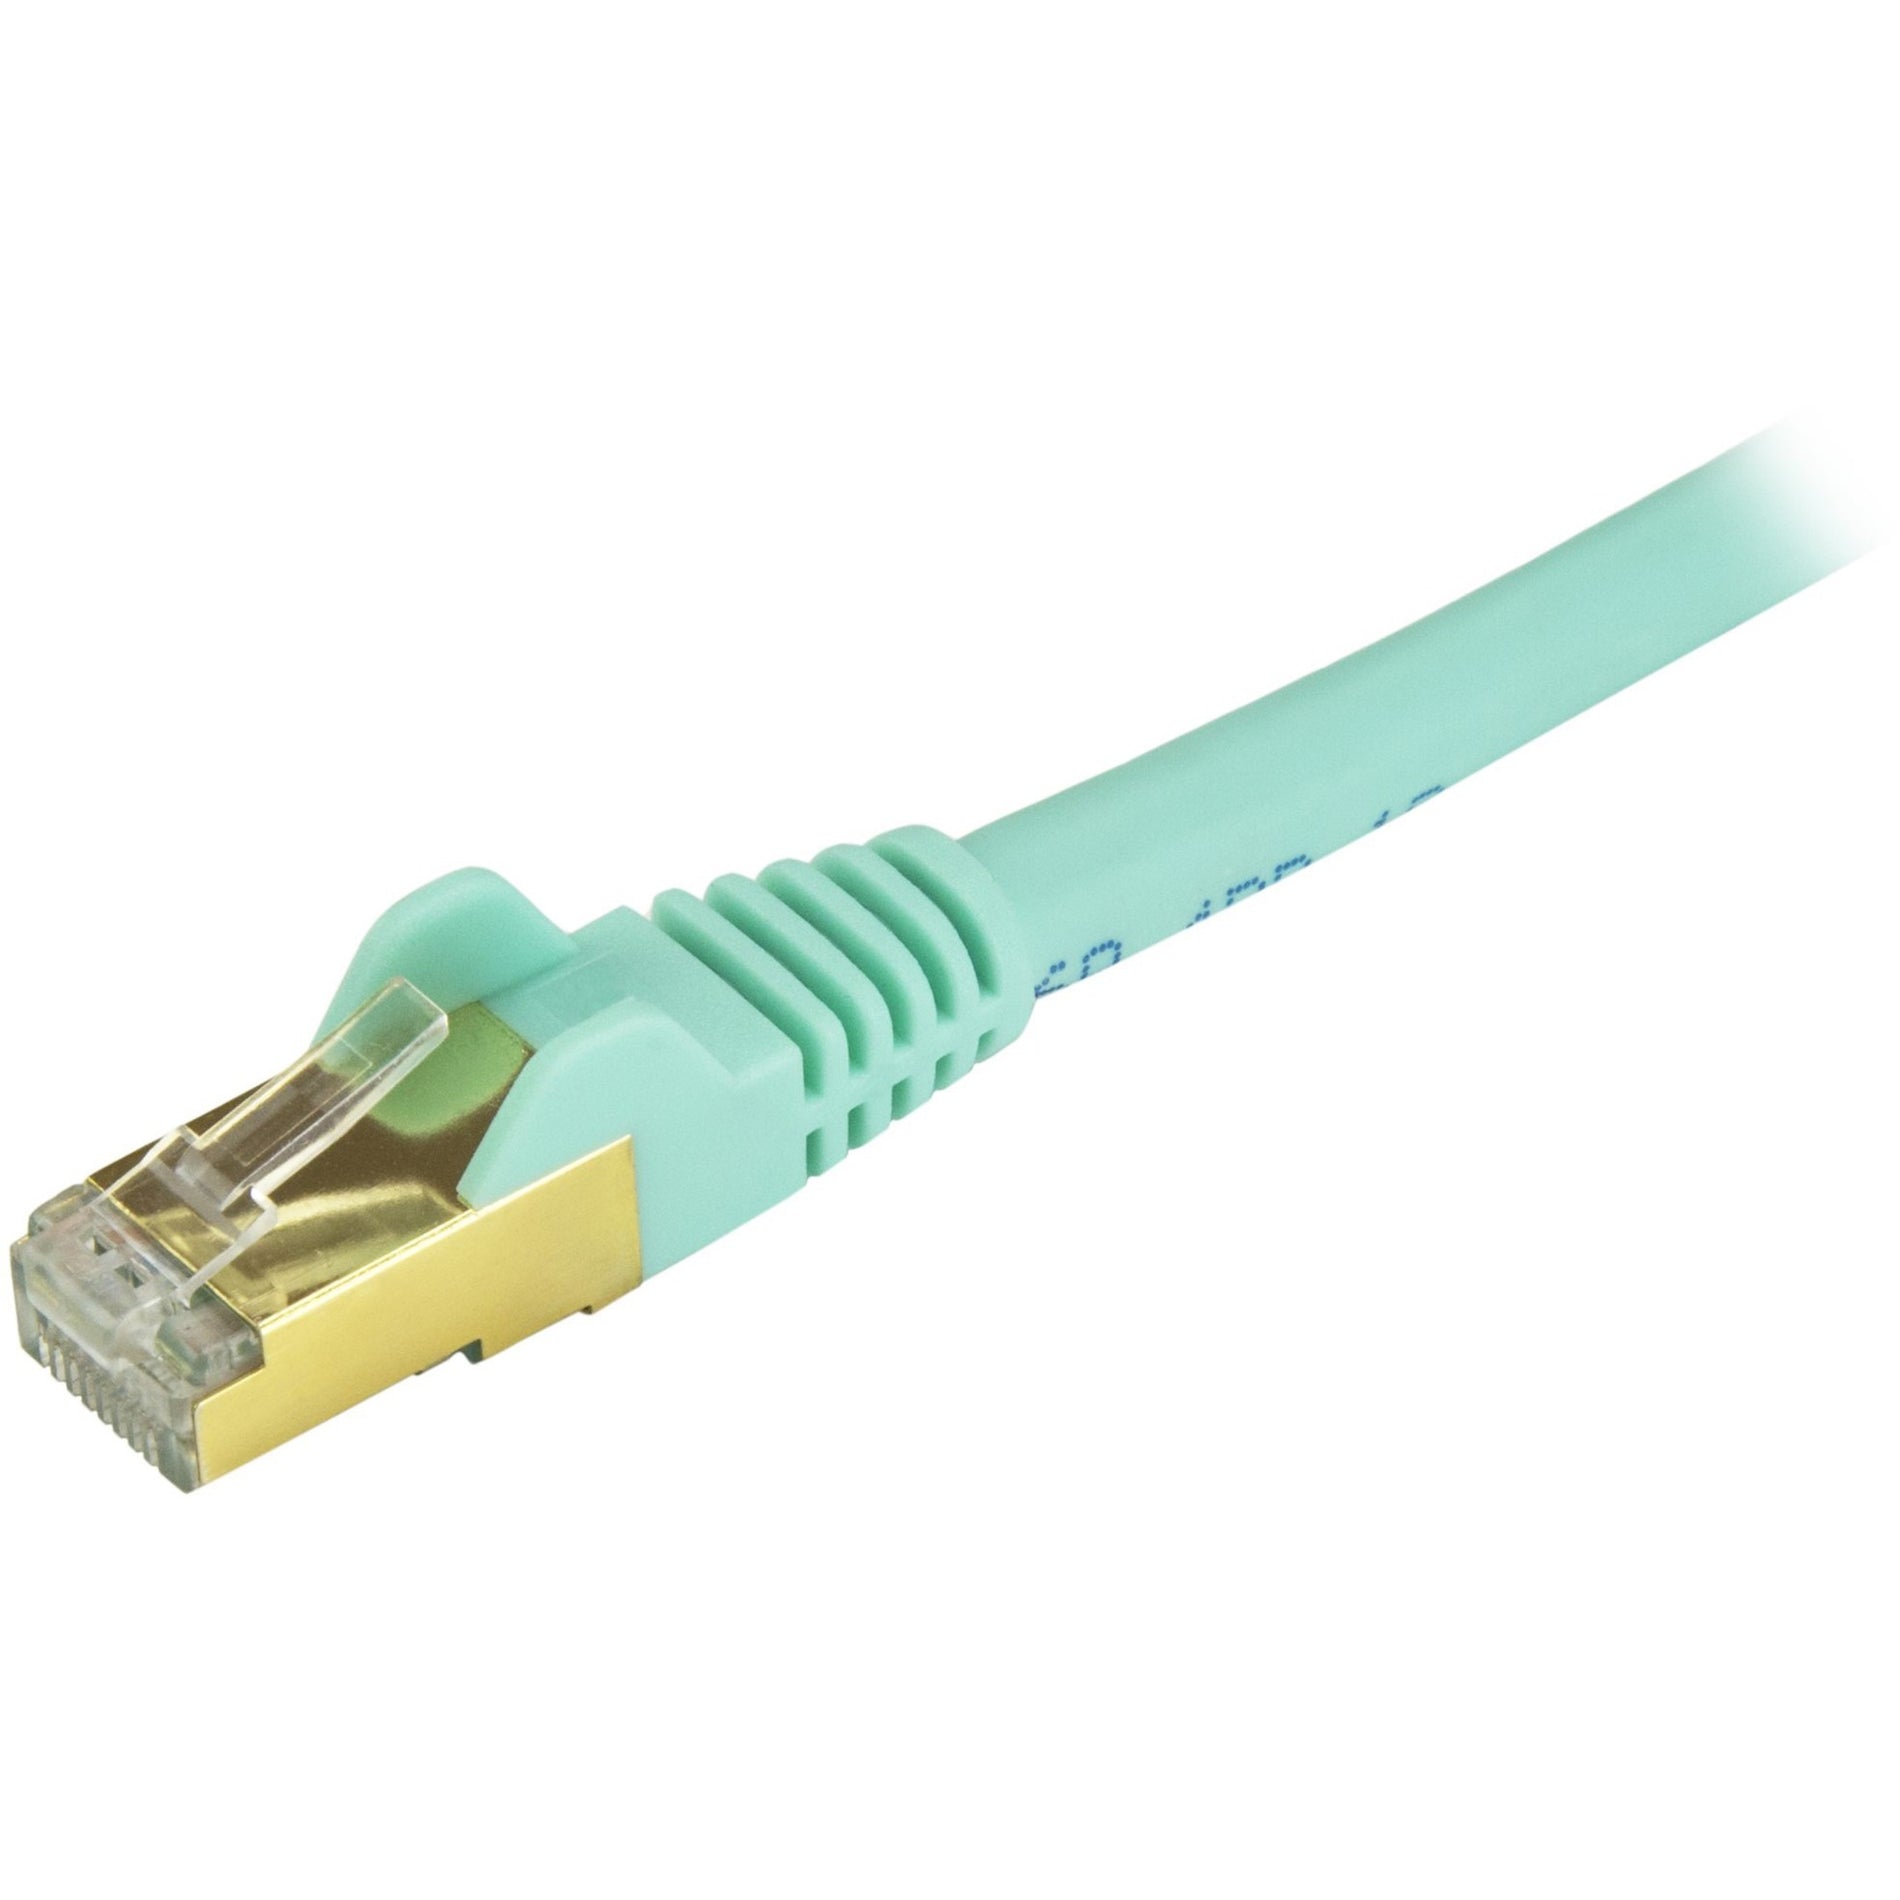 StarTech.com C6ASPAT5AQ Cat6a Ethernet Patch Cable - Shielded (STP) - 5 ft., Aqua, Snagless RJ45 Ethernet Cord